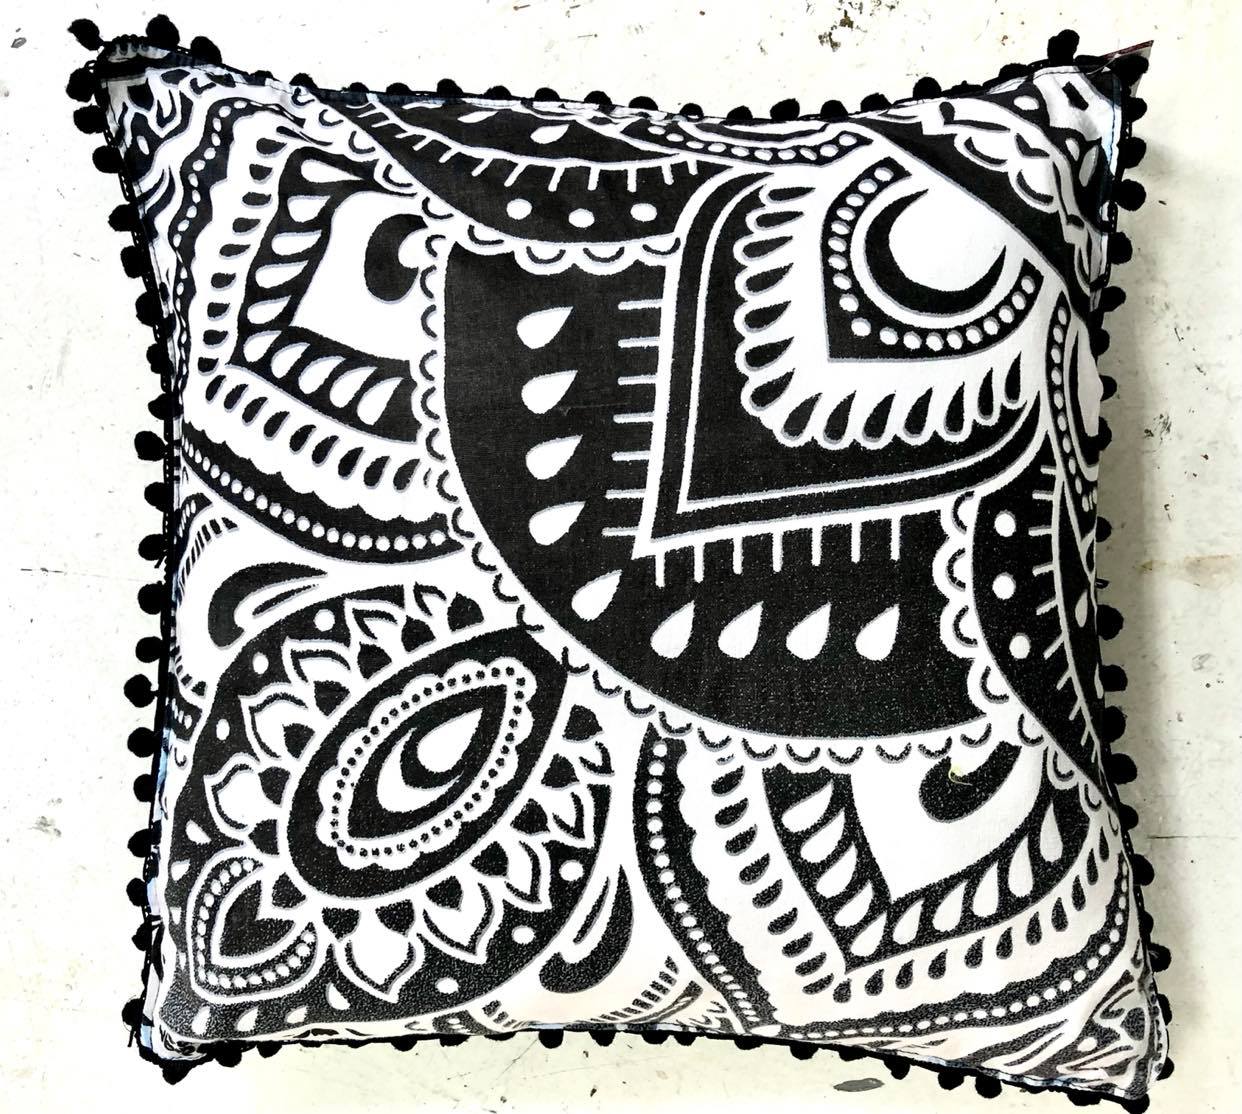 Mandala Cushion Covers